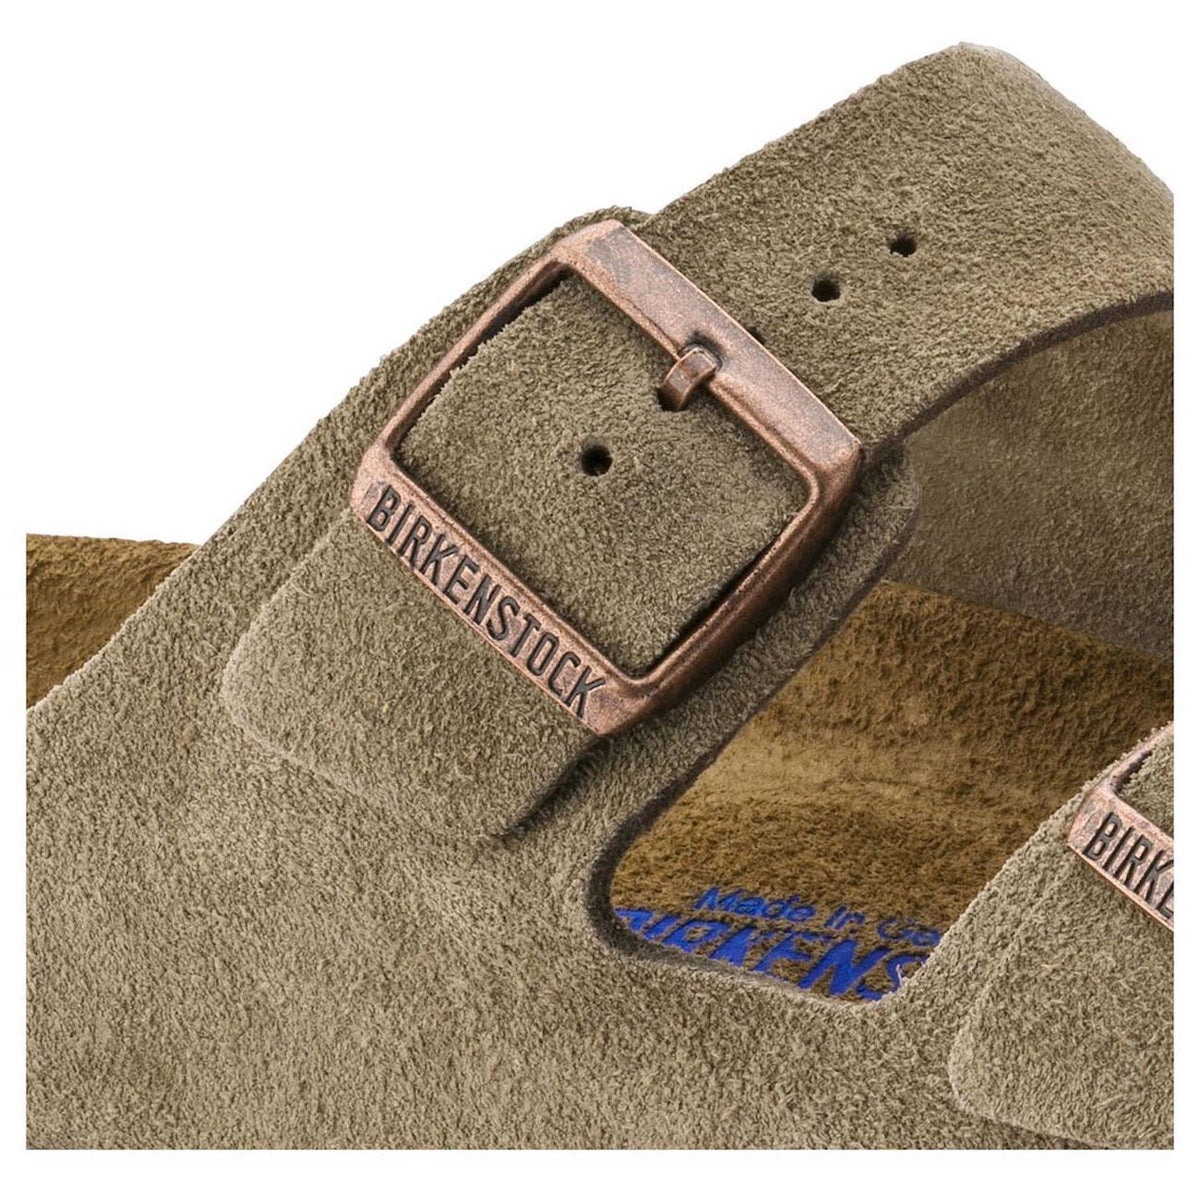 Birkenstock Classic, Arizona, Soft-Footbed, Suede Leather, Regular Fit, Taupe Sandals Birkenstock Classic 